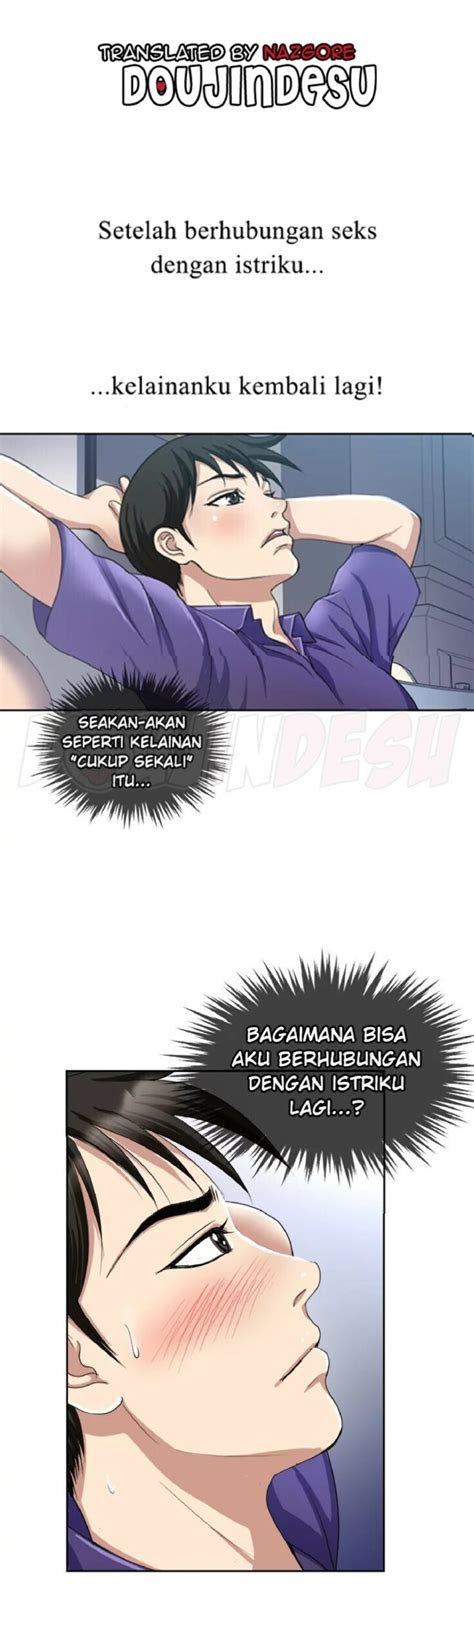 <b>Komik Dewasa</b> Bahasa indonesia, Baca dan Download <b>komik</b>, Manga, Manhwa, Manhua, Doujin, Doujinshi dan <b>Komik</b> Hijab Kartun Indonesia. . Komik dewasa